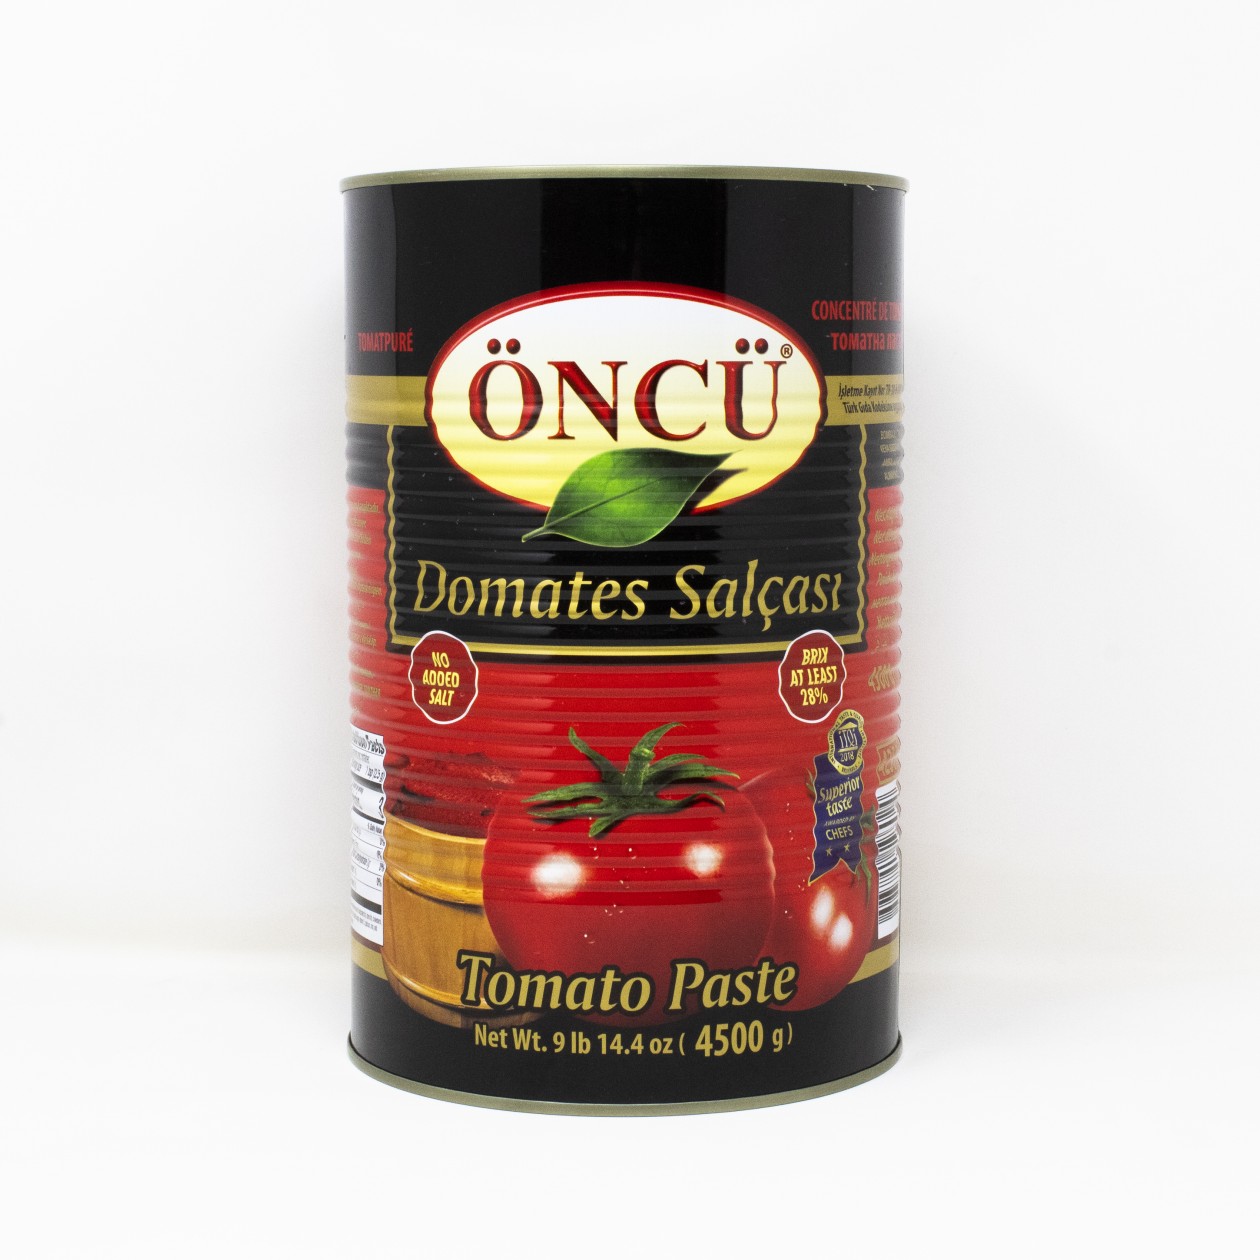 Oncu Tomato Paste 4300g